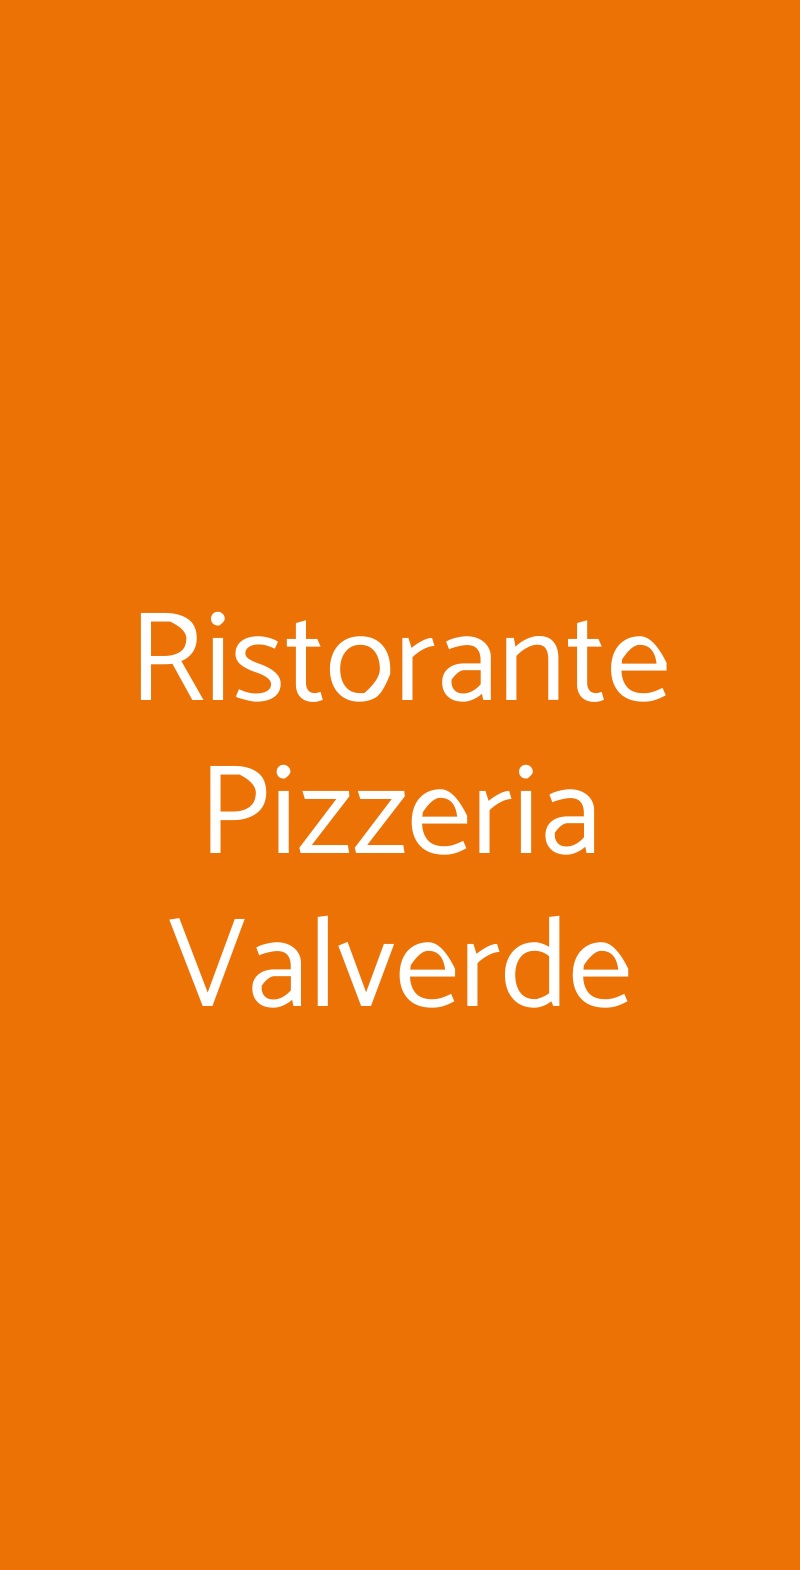 Ristorante Pizzeria Valverde Ravenna menù 1 pagina